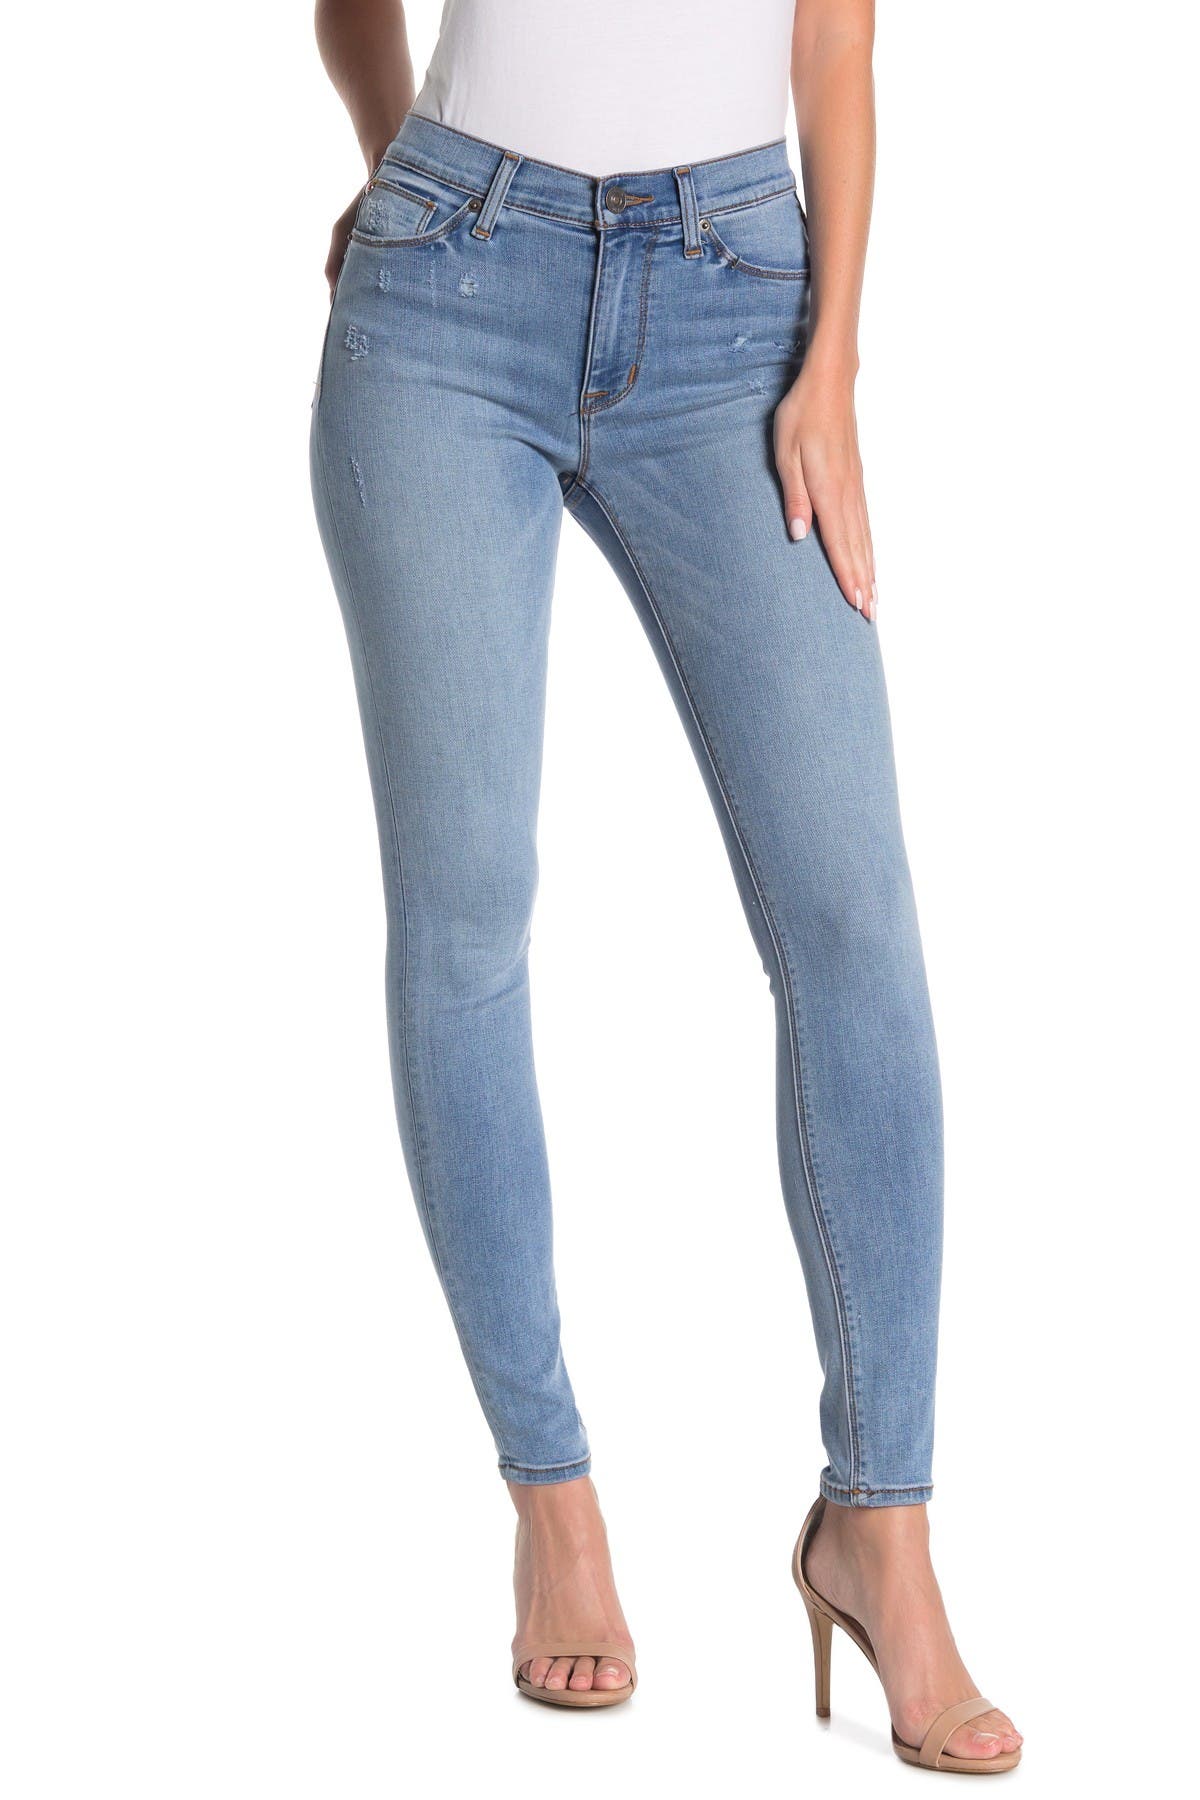 HUDSON Jeans | Blair Super Skinny Jeans 